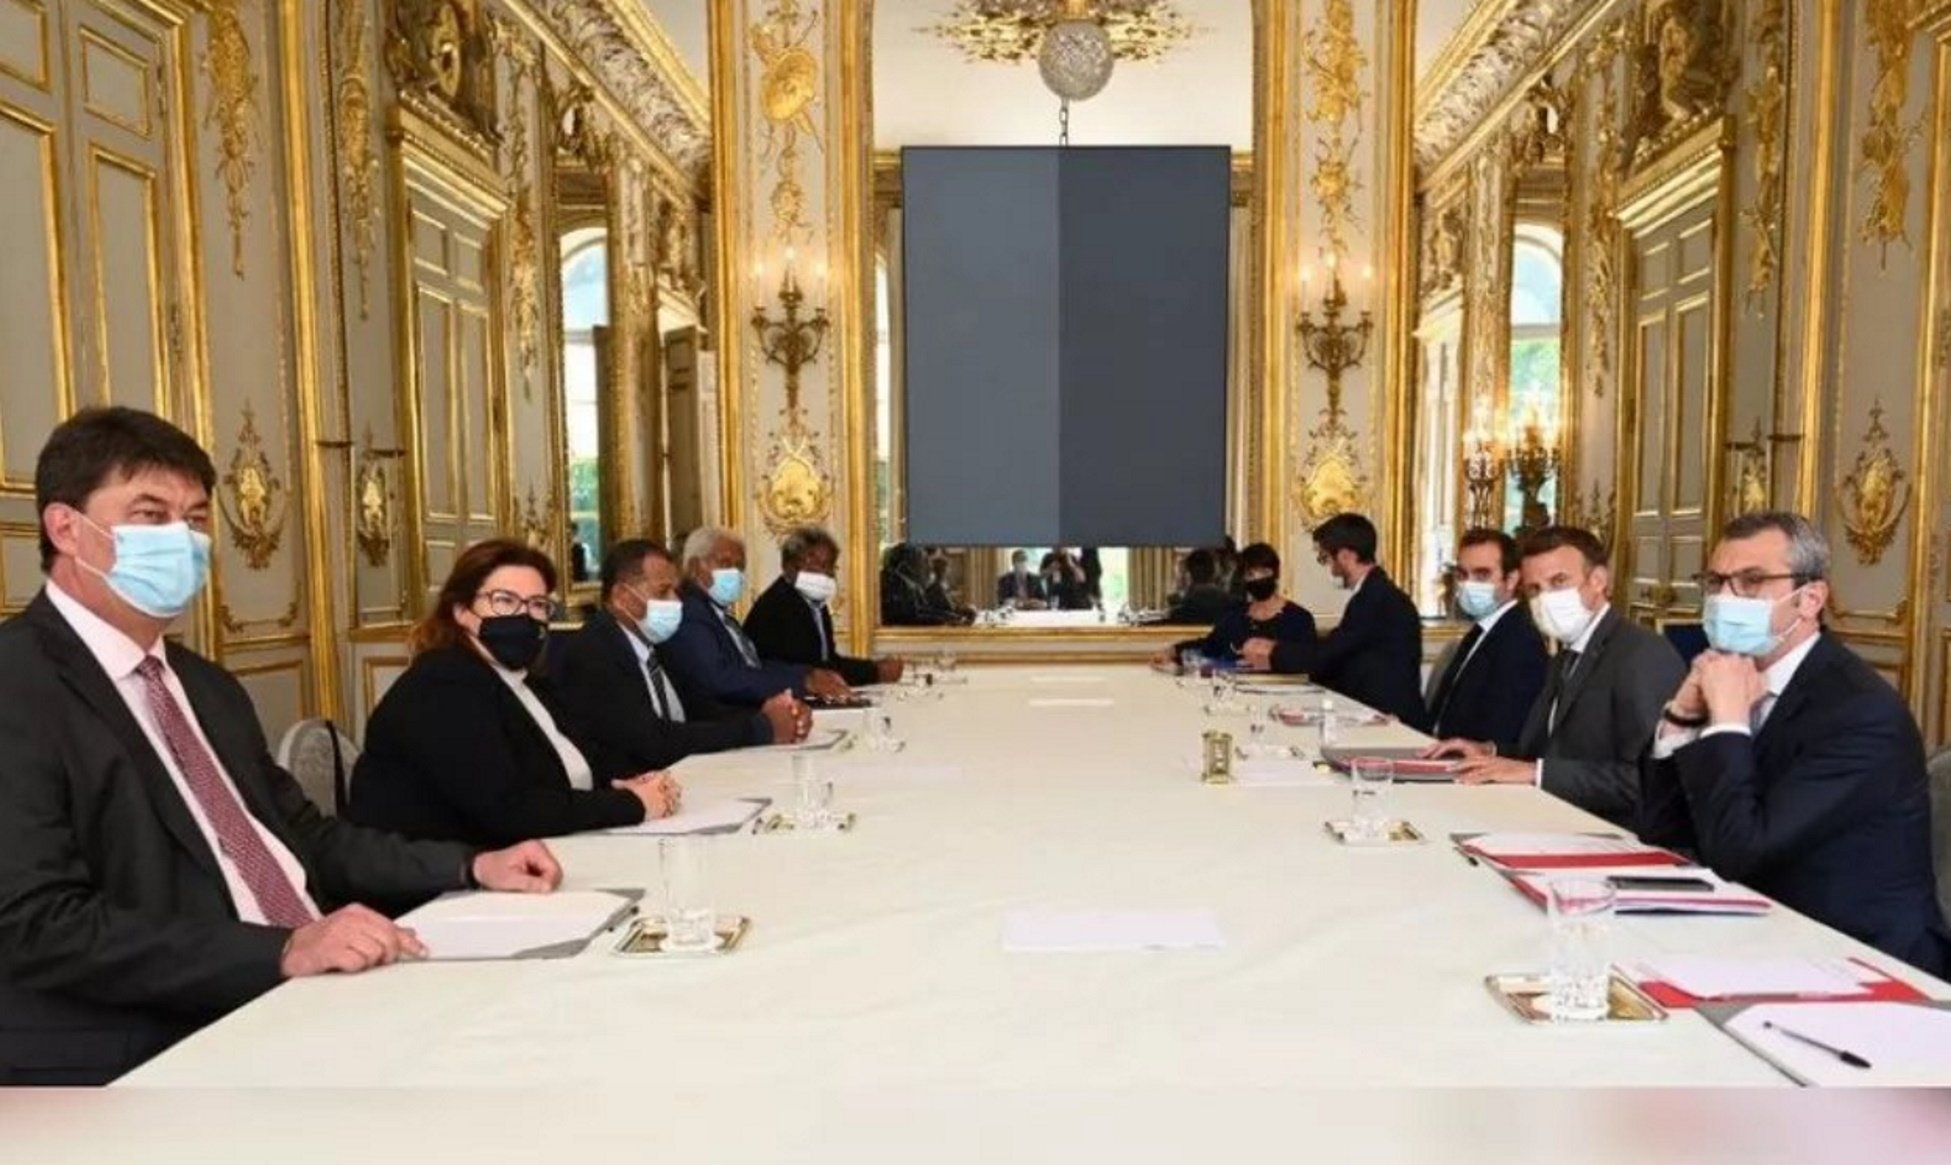 Así la mesa de diálogo de Macron ha pactado un referéndum